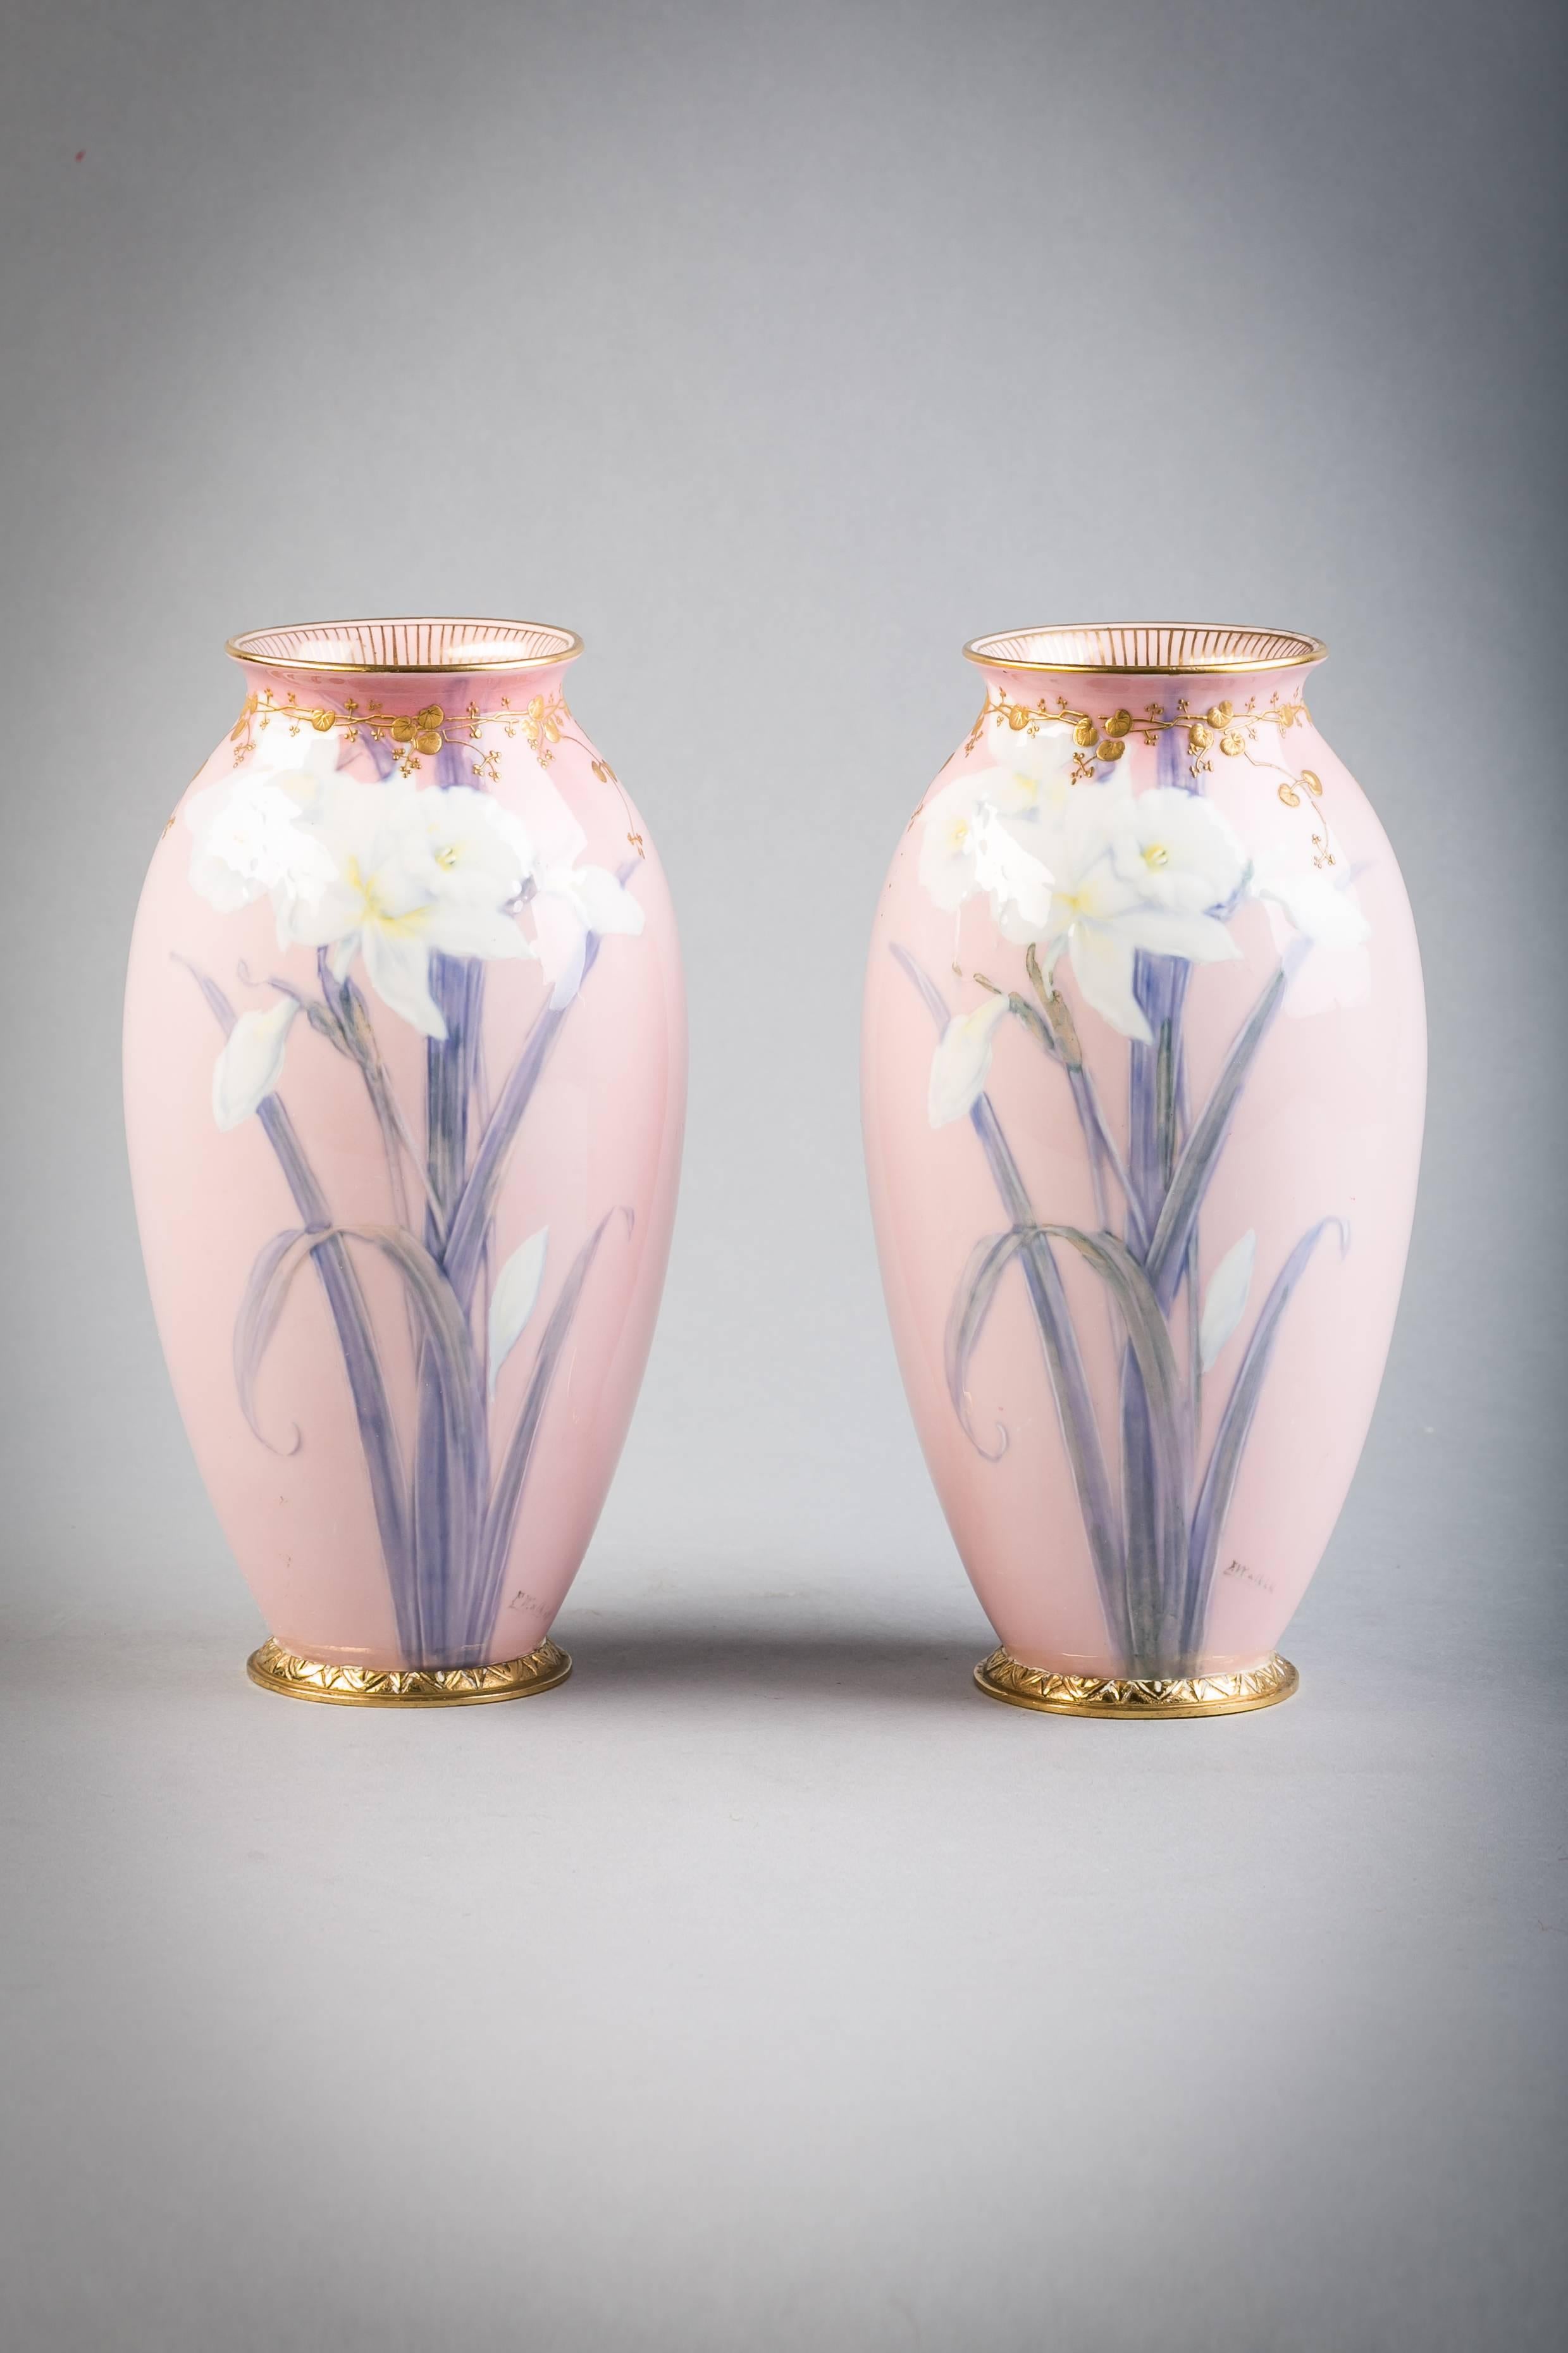 Pair of English porcelain gilt bronze-mounted pate-sur-pate vases, Doulton Burslem, circa 1900.

Signed.